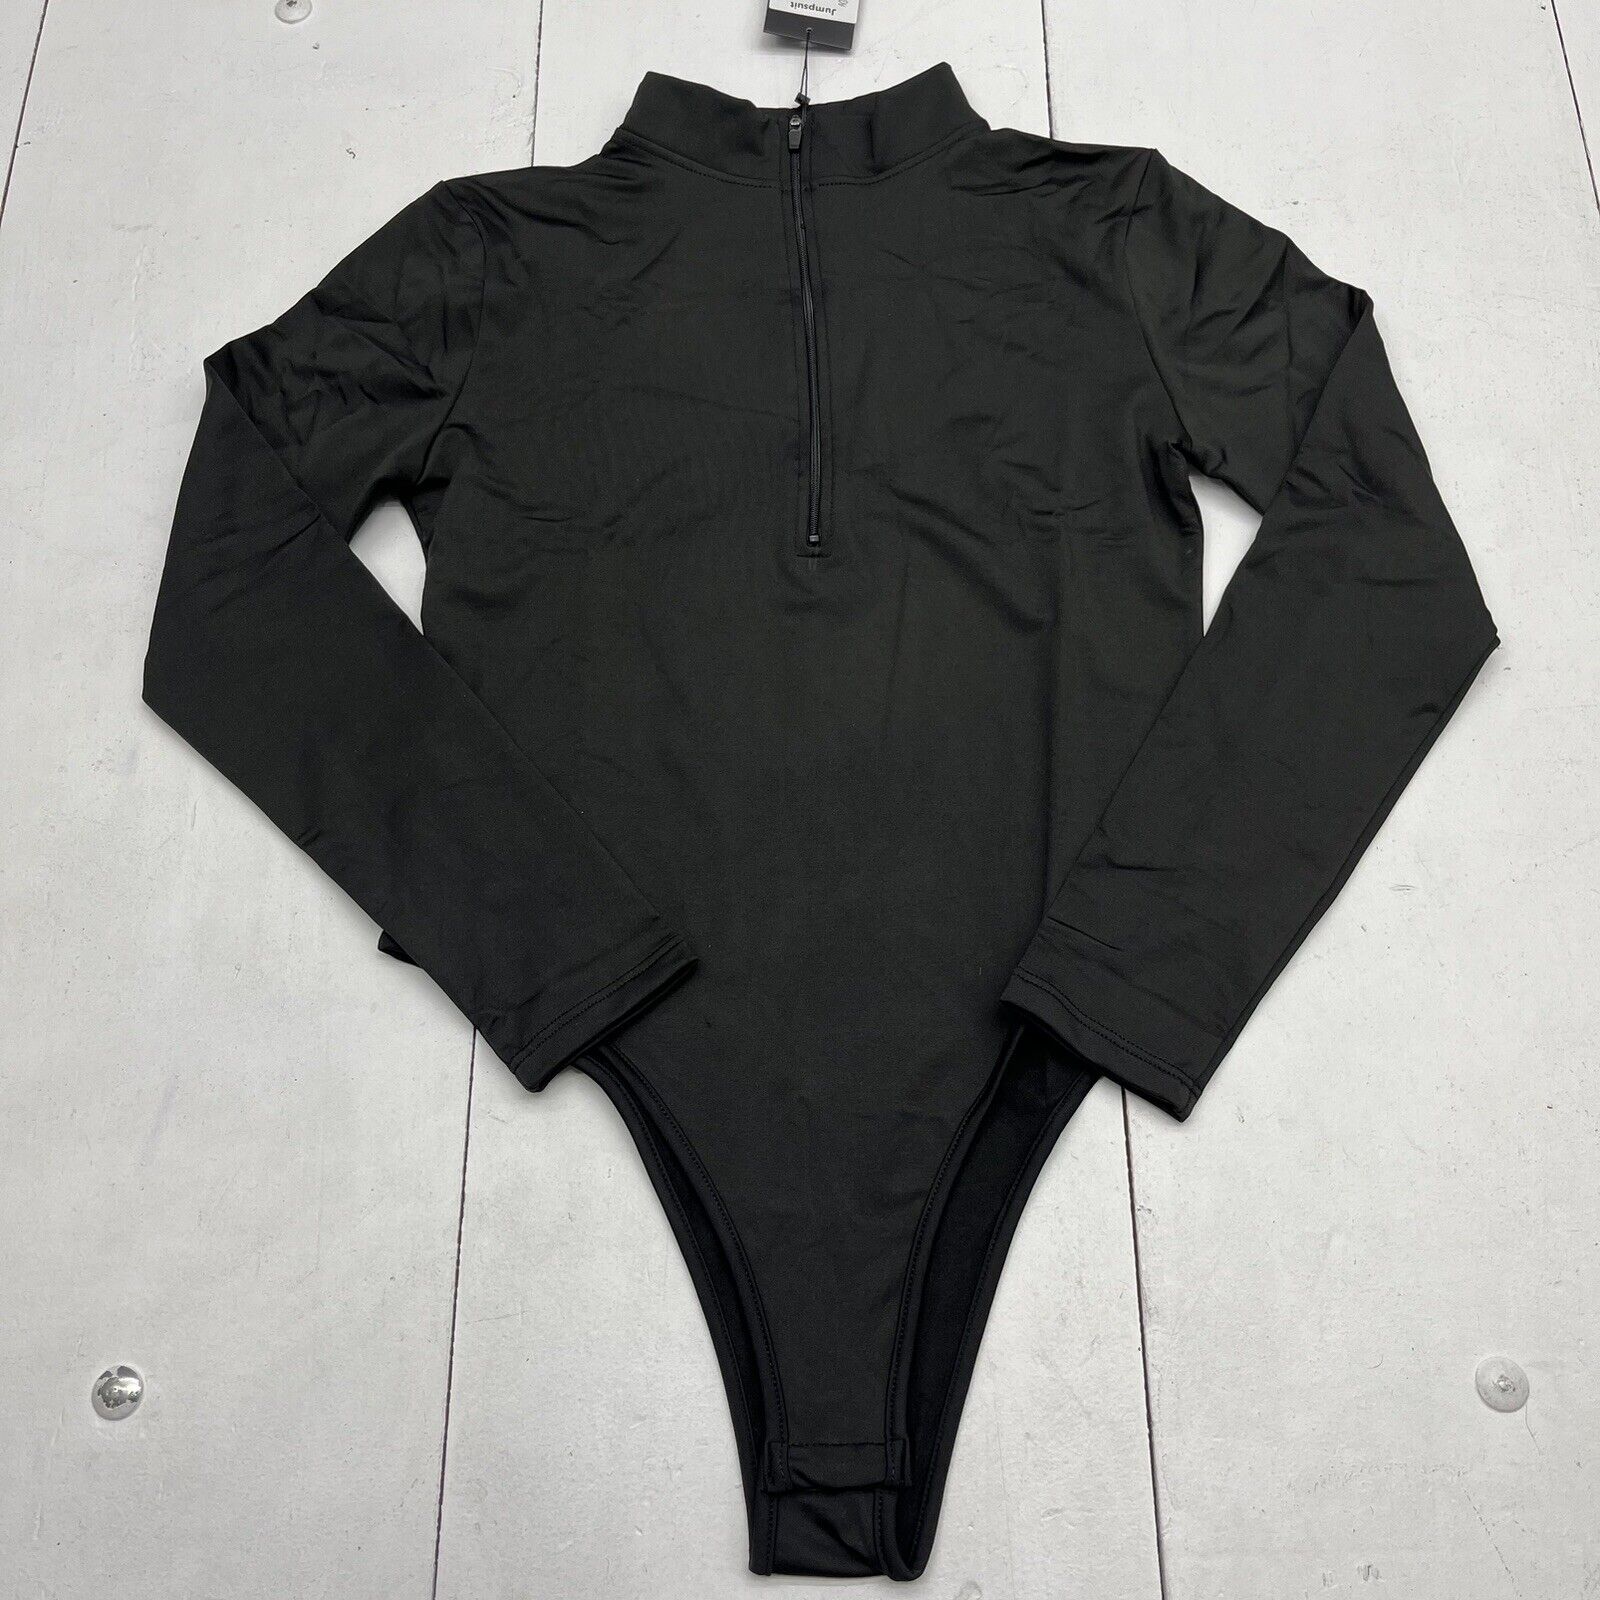 Go G.G Black Long Sleeve Half Zip Bodysuit Women’s Size X-Large